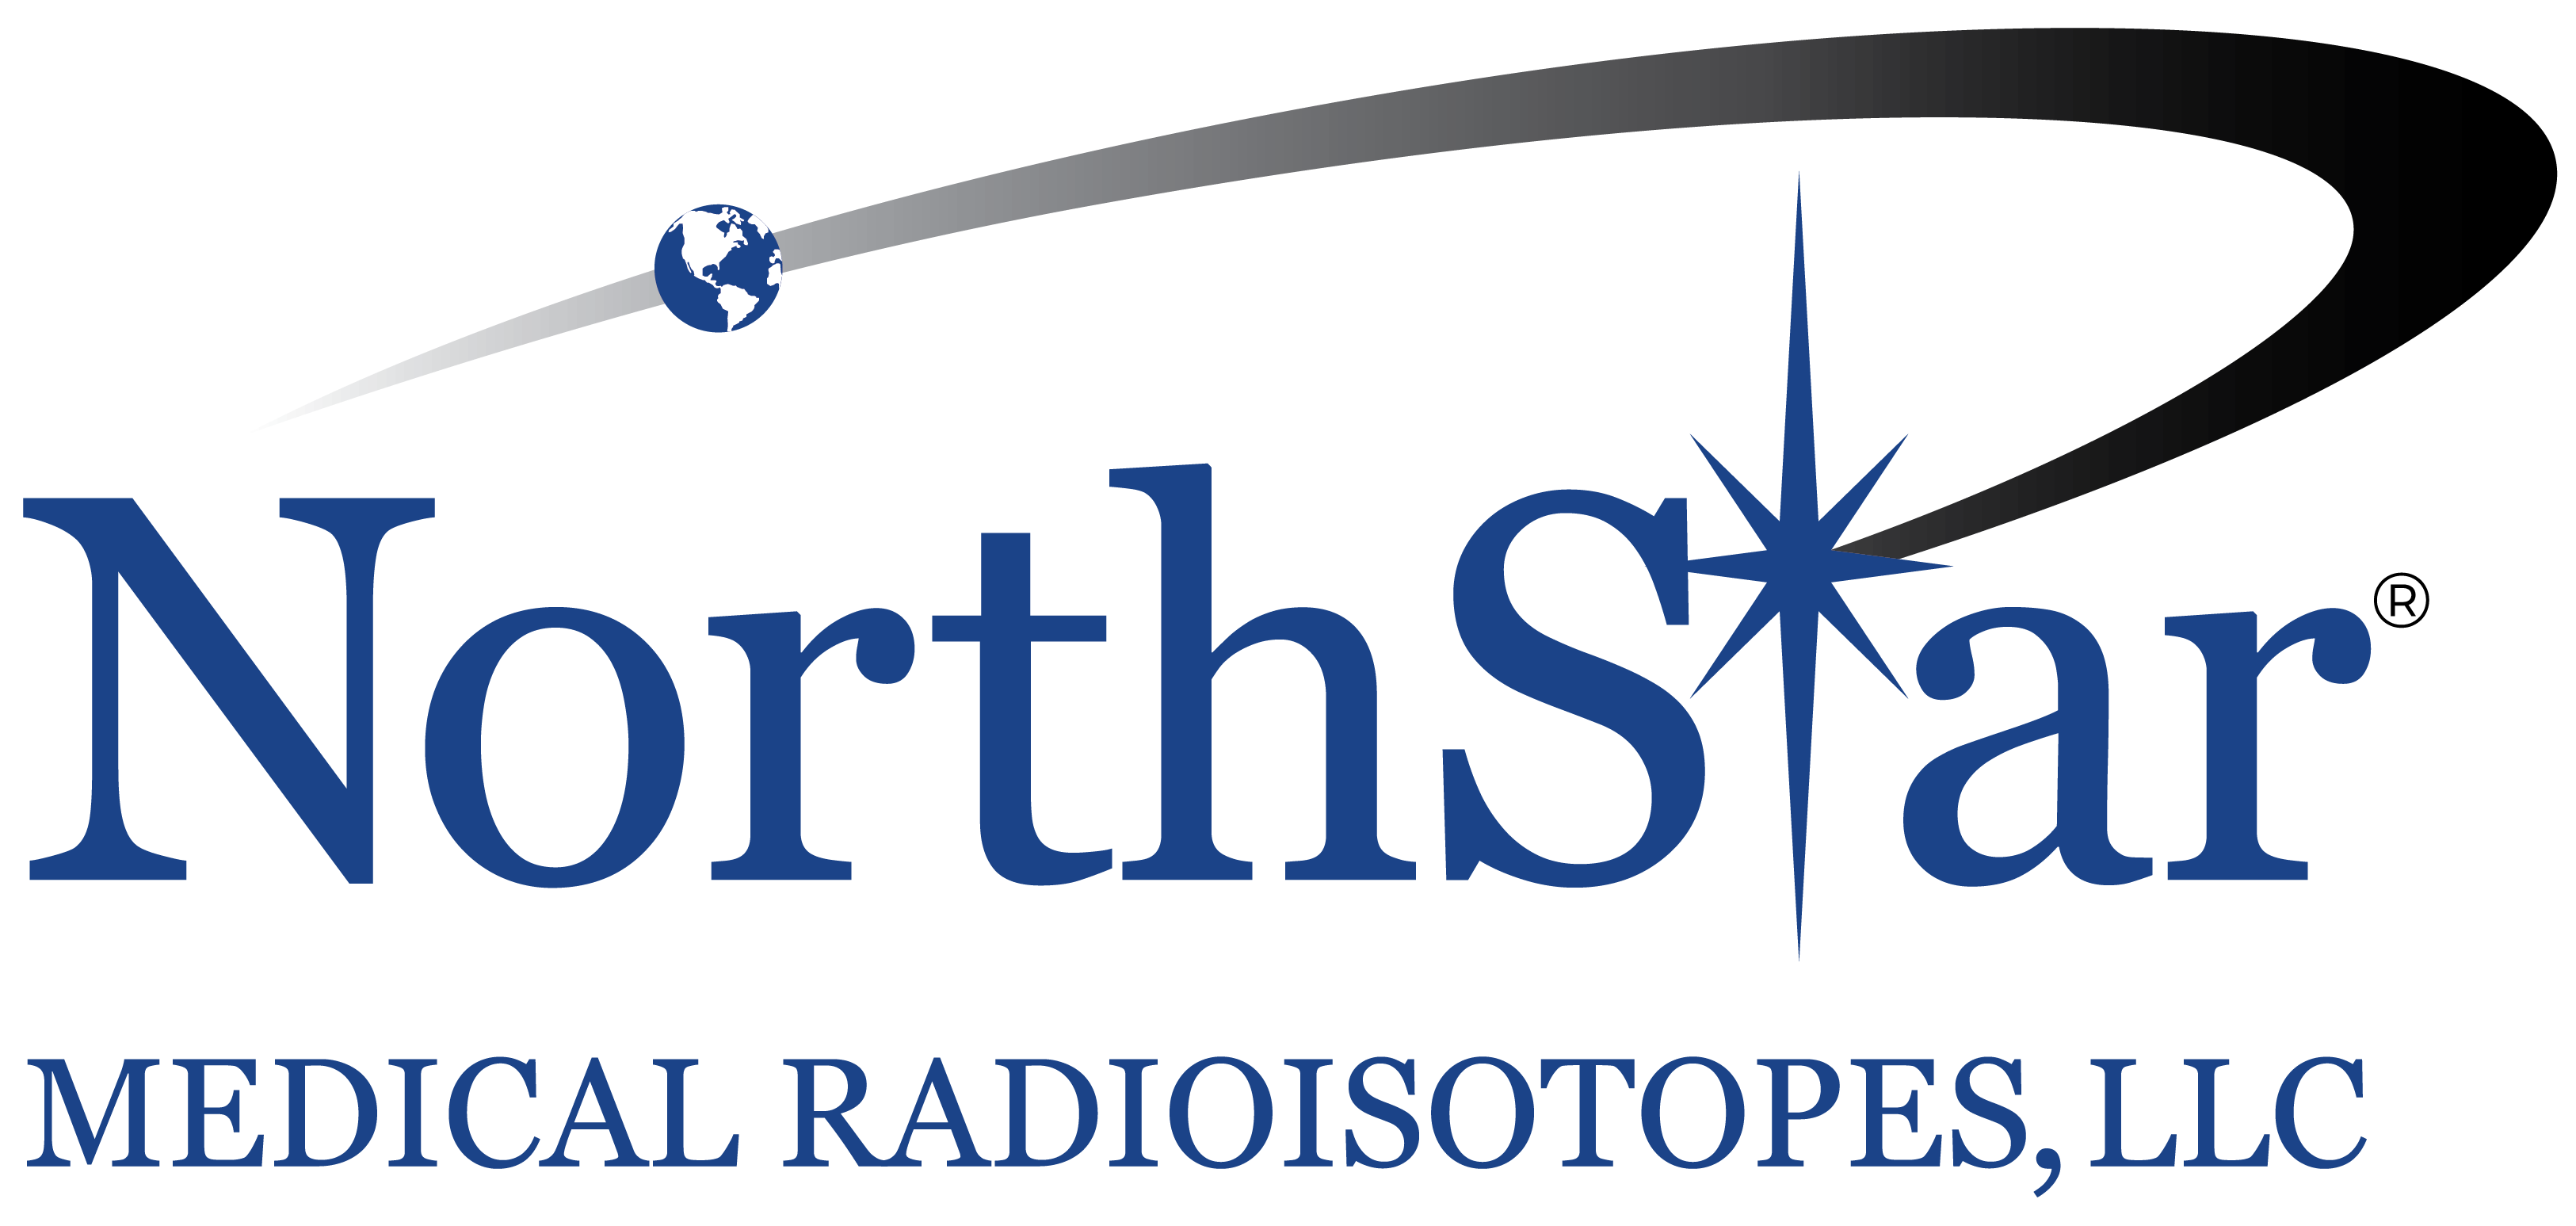 NorthStar Medical Radioisotopes, LLC Logo